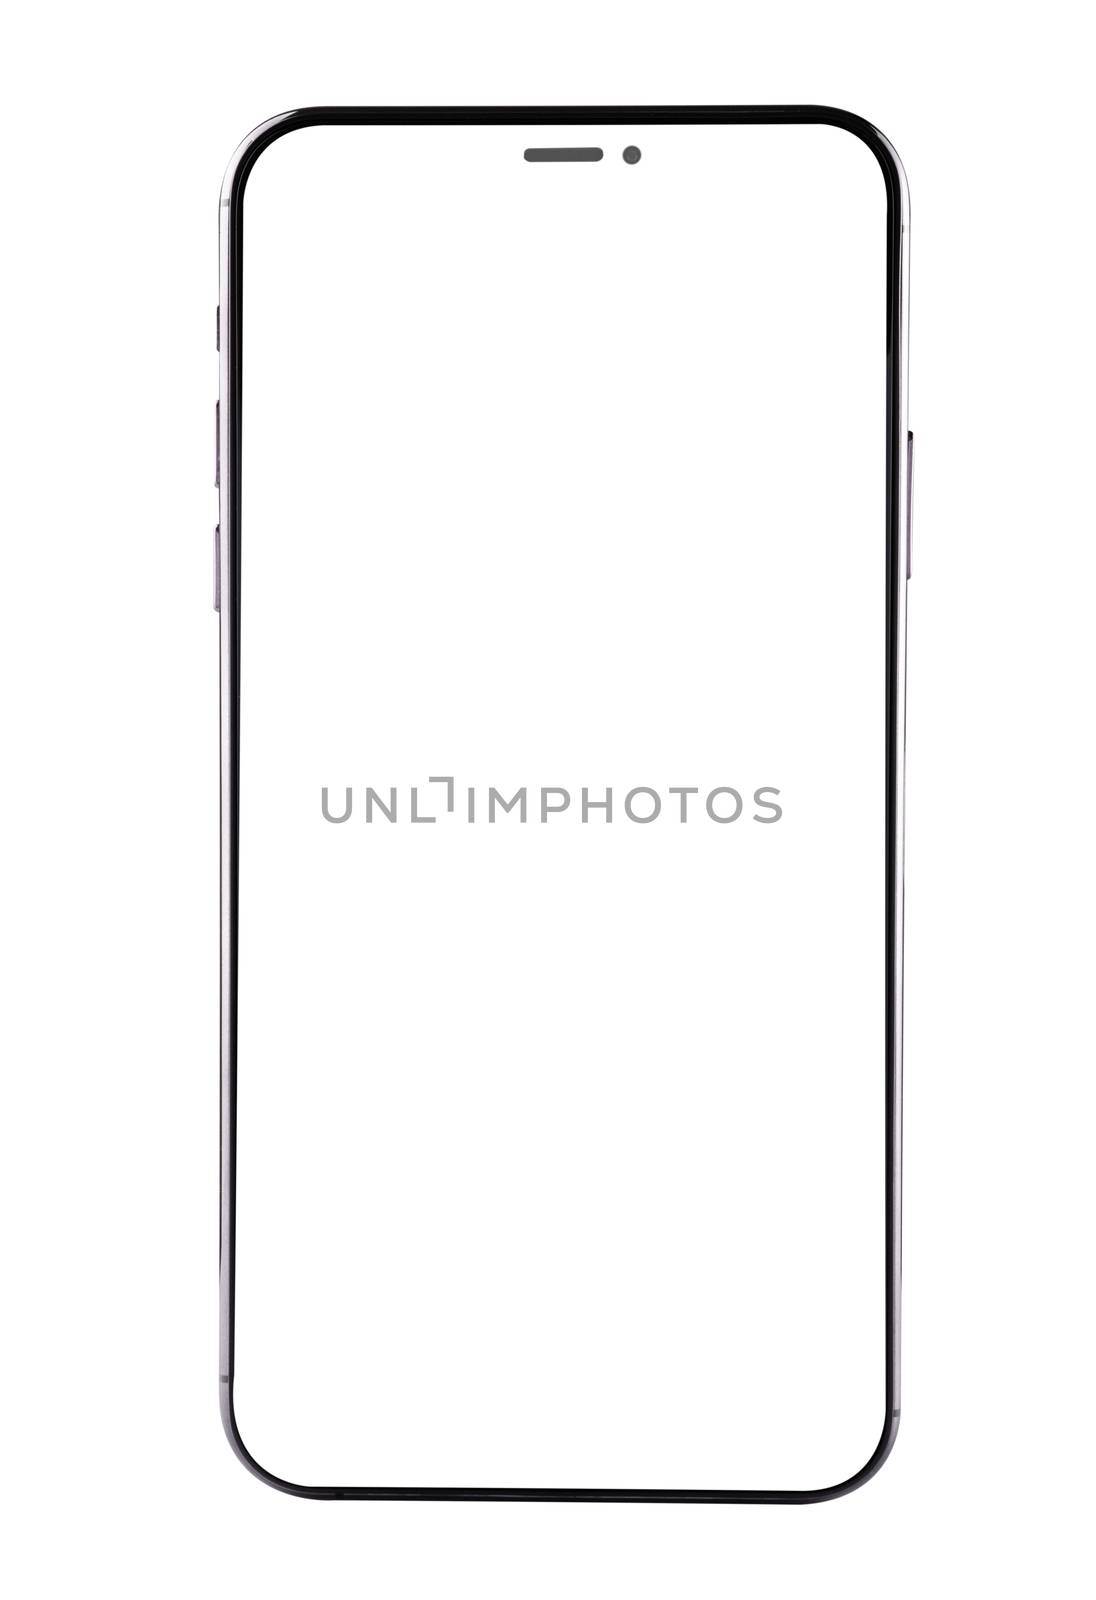 Smartphone mobile mock up blank front screen by Sorapop